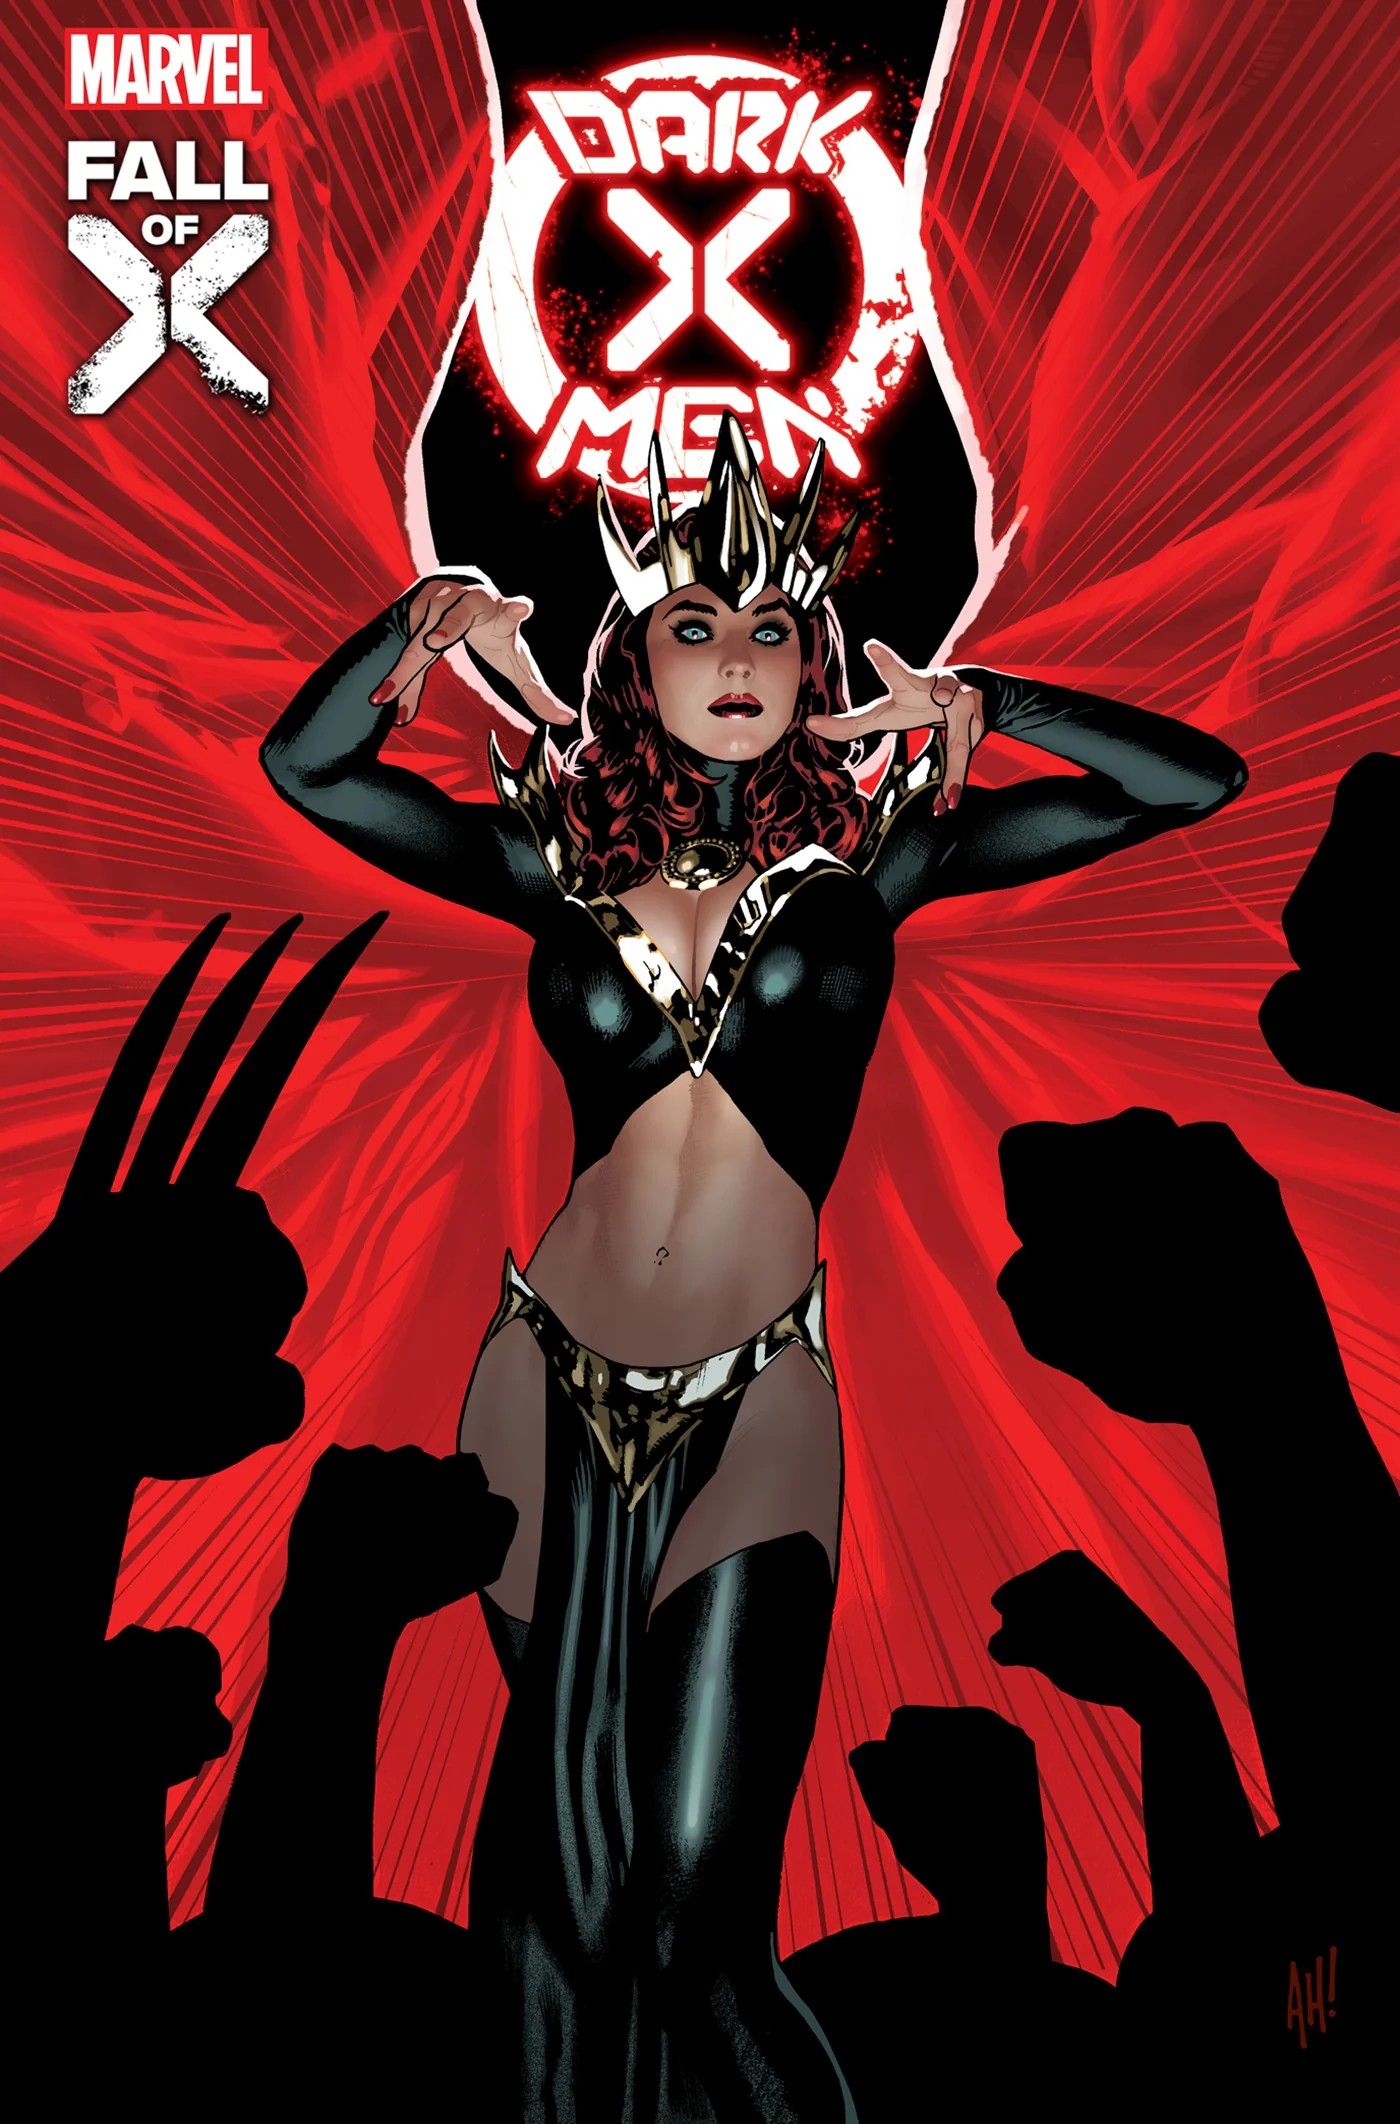 New Dark X-Men Cover Transforms The Goblin Queen Into The X-Men’s Leader